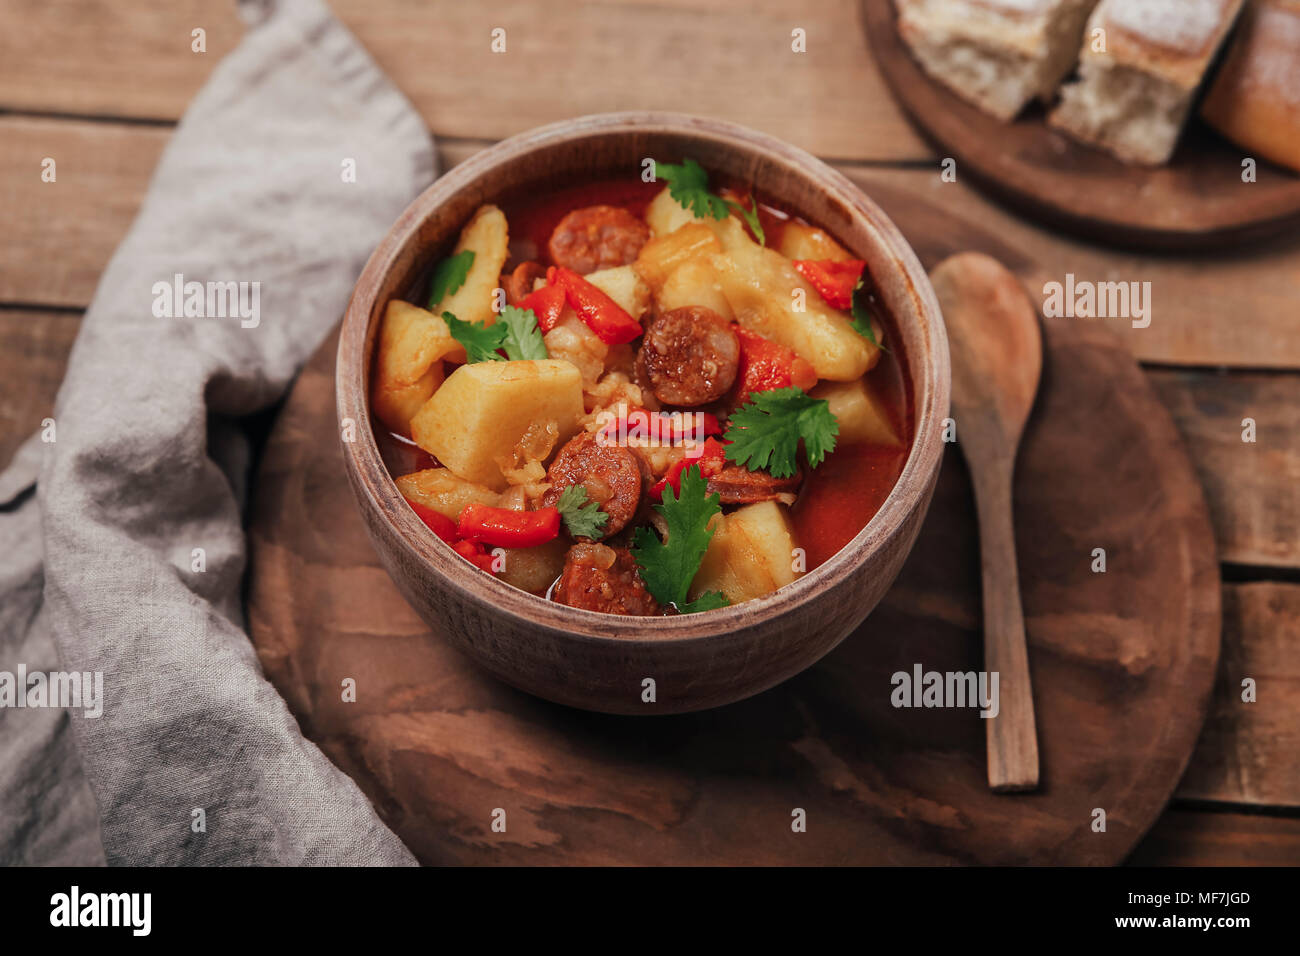 Riojan cuisine, stew with potatoes and chorizo Stock Photo